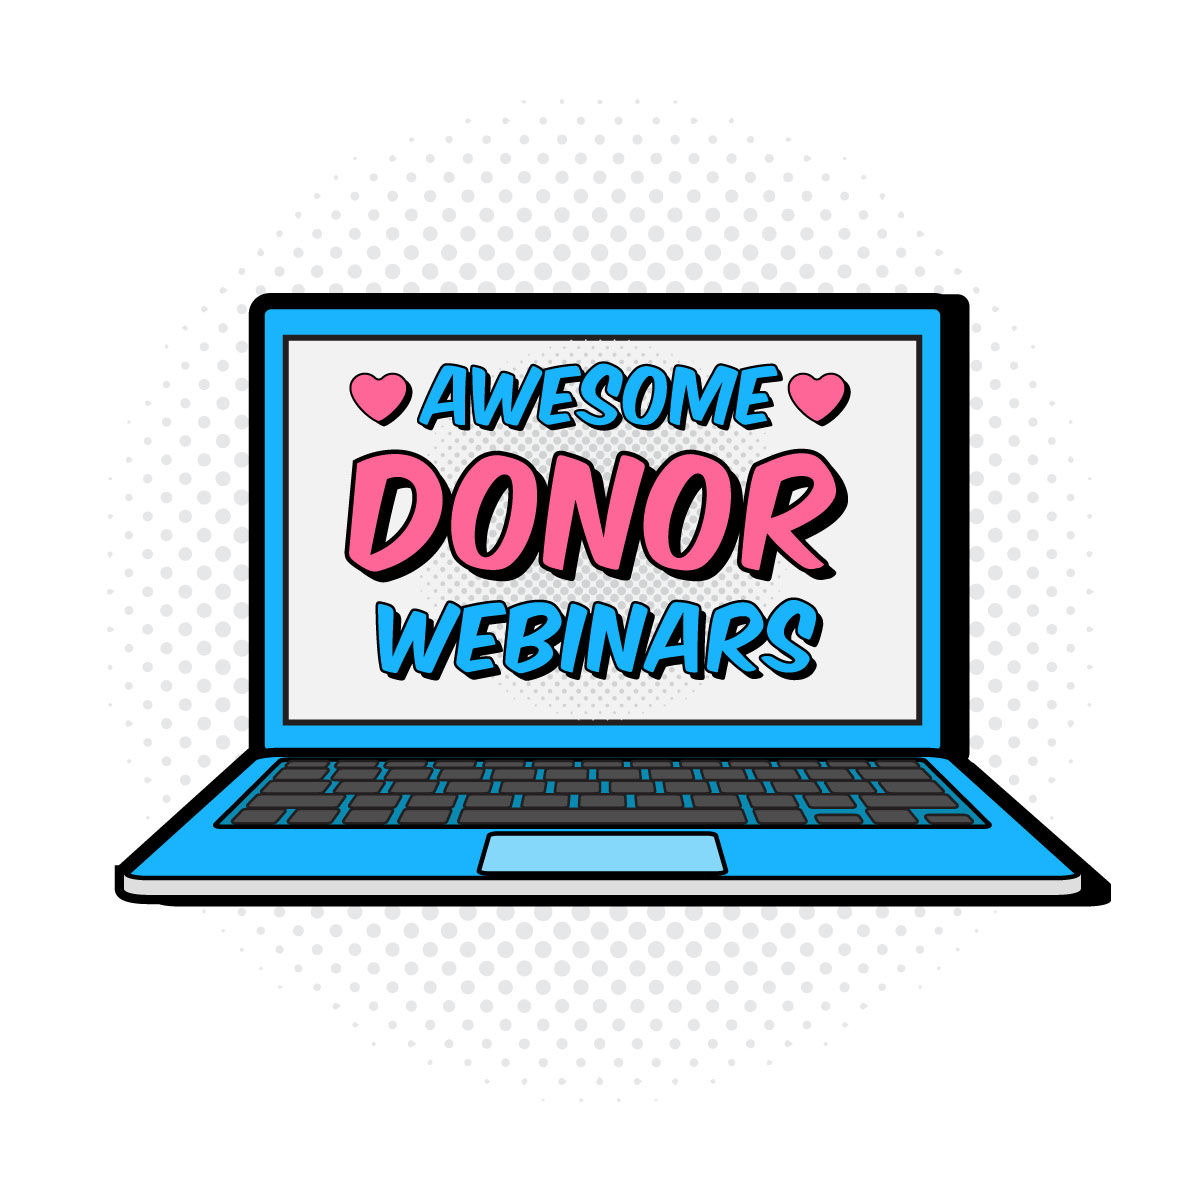 Awesome Donor Webinars